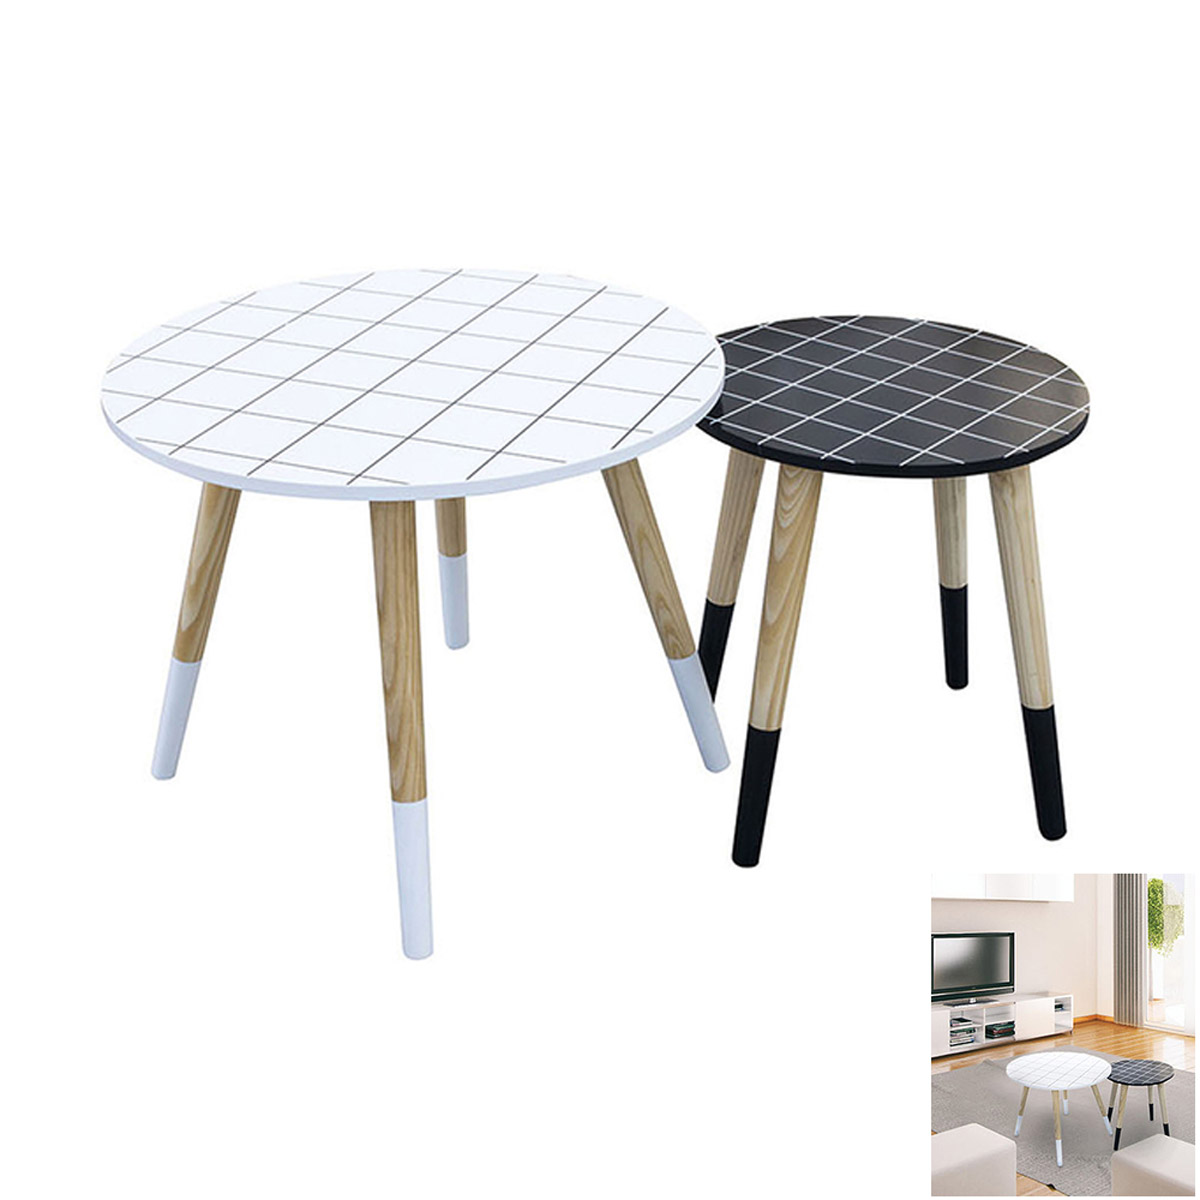 2 tables gigognes bois \'Boho\' noir blanc - 48 et 33 cm - [R2399]